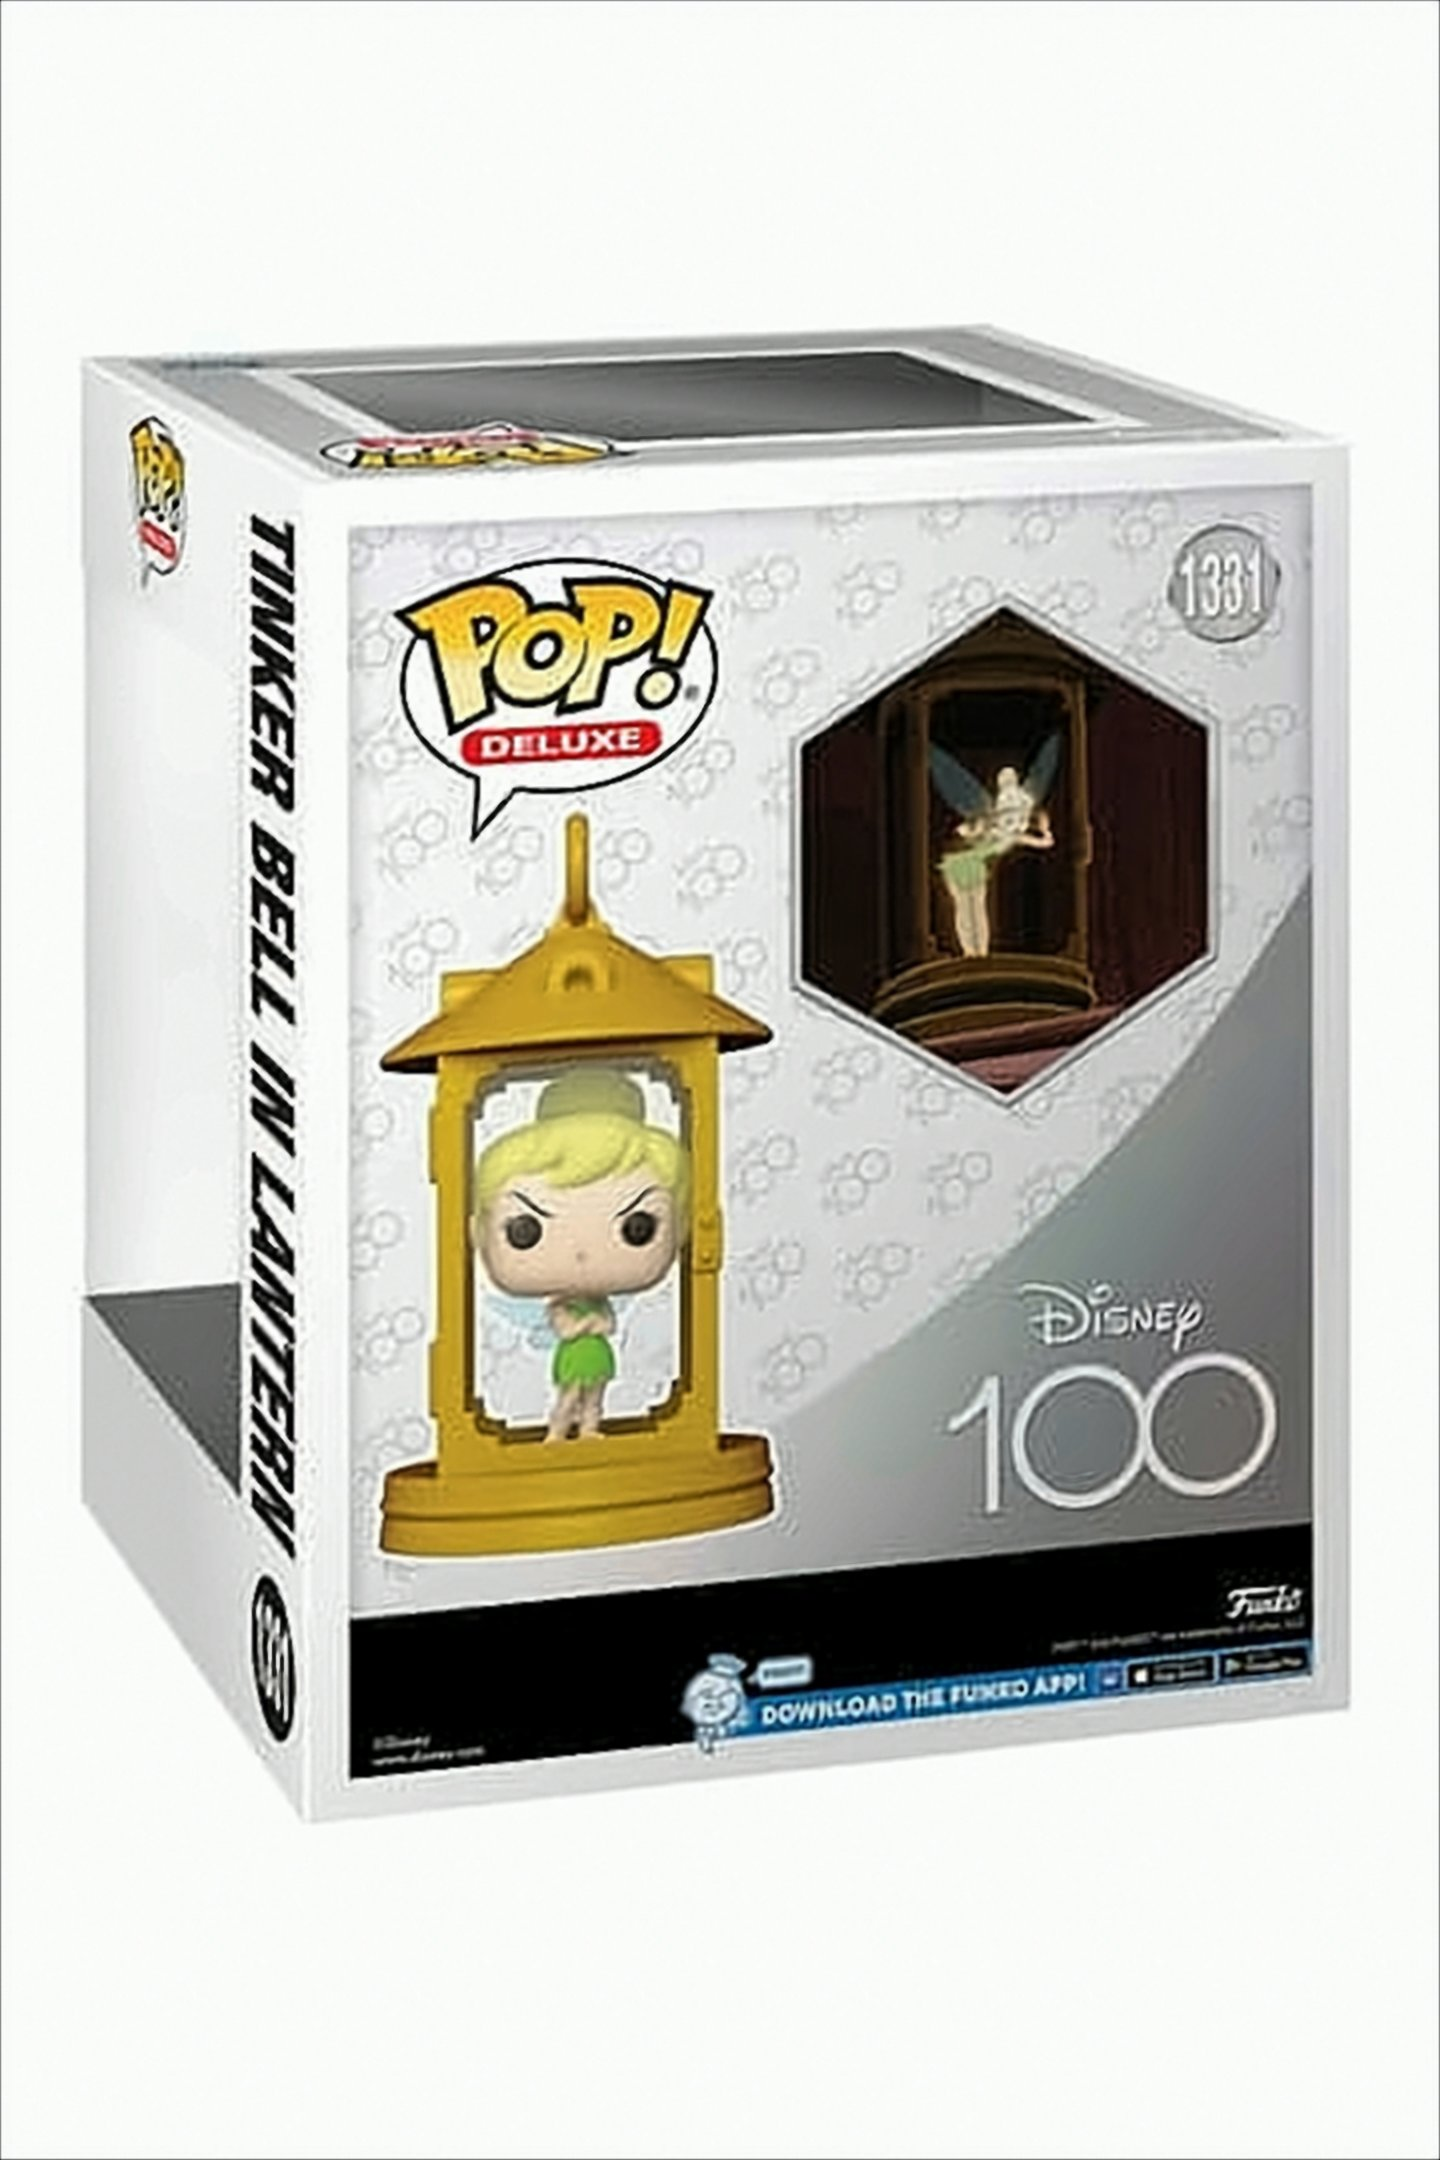 POP Deluxe - Disney 100 Lantern - Tinker Bell in